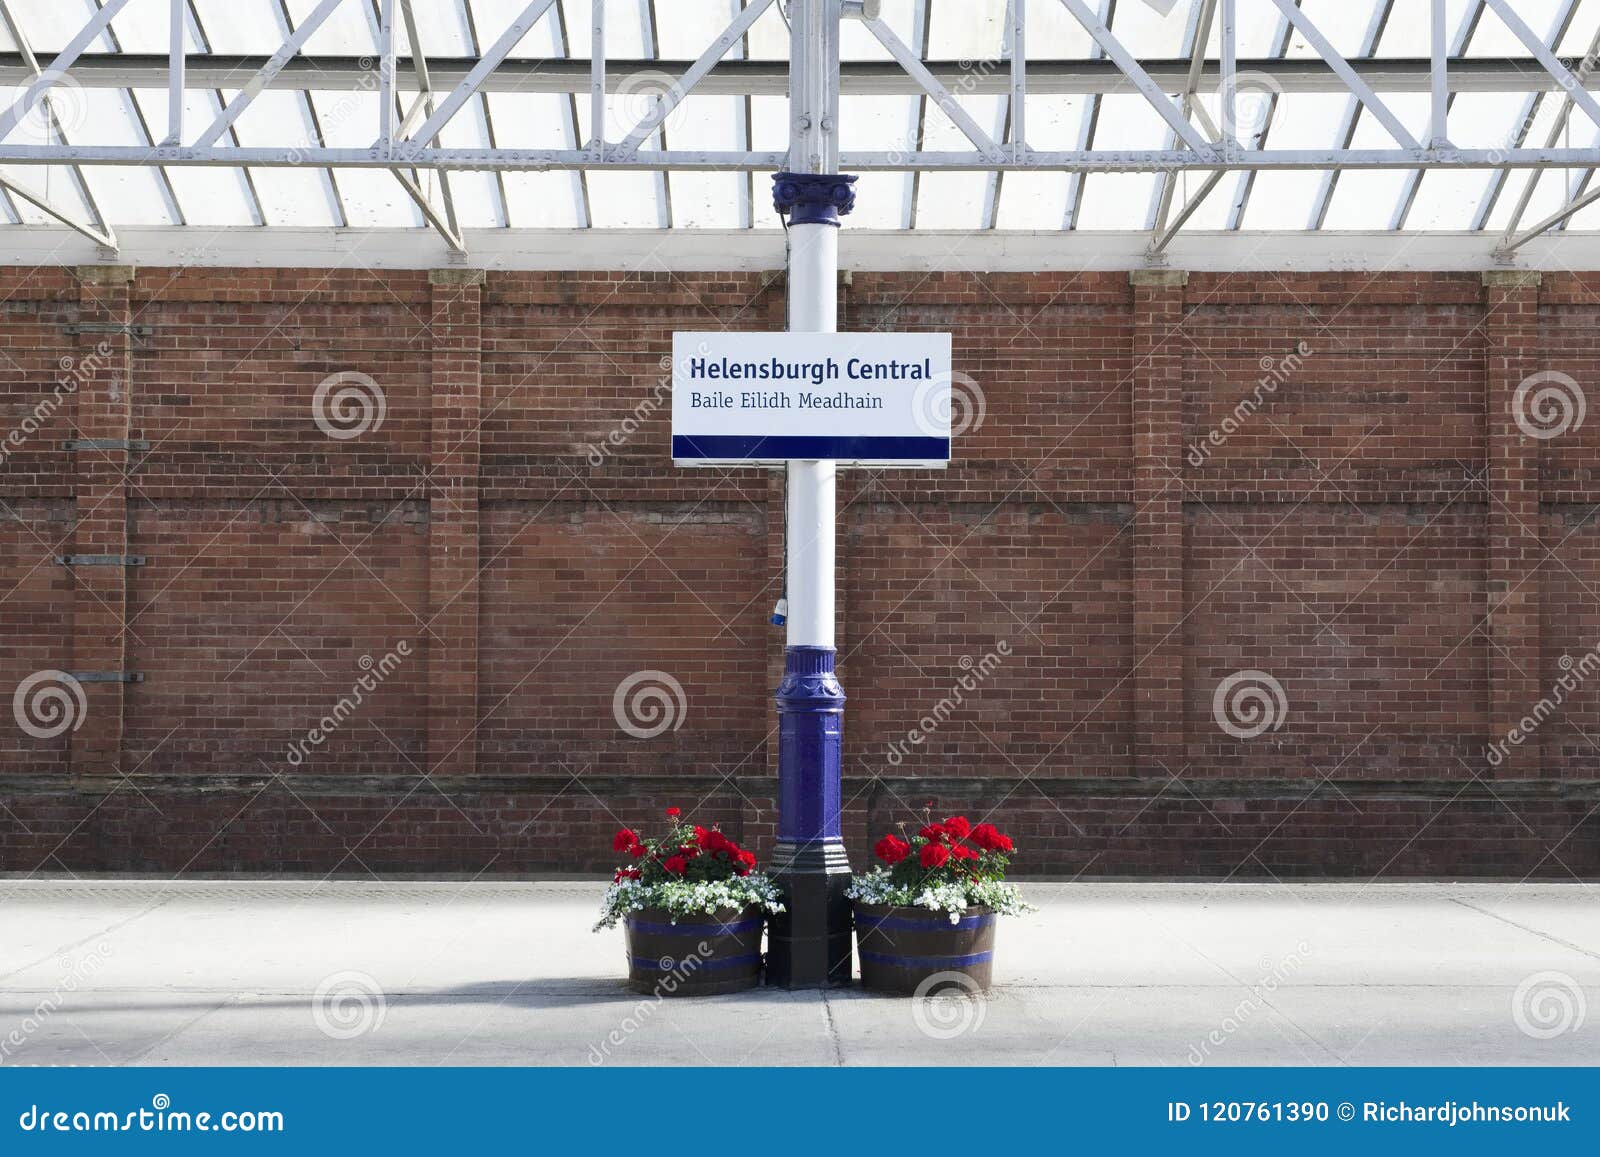 train station sign brick wall railway central london